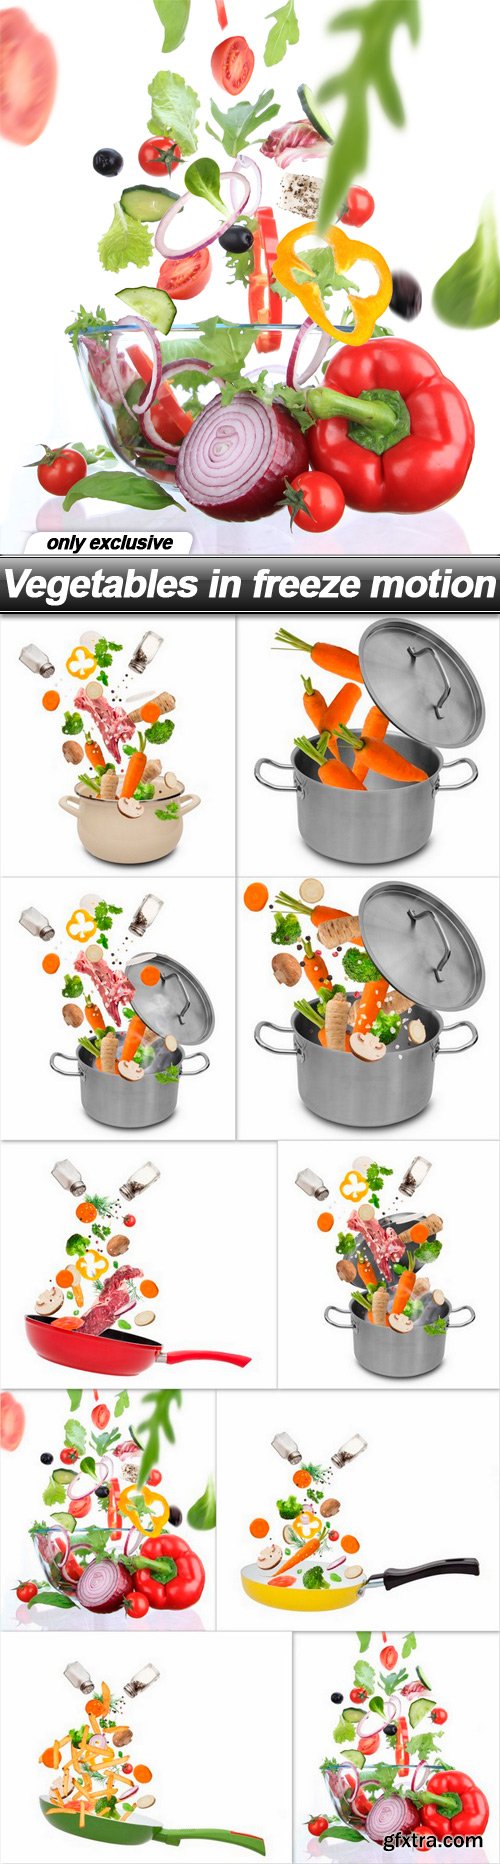 Vegetables in freeze motion - 10 UHQ JPEG